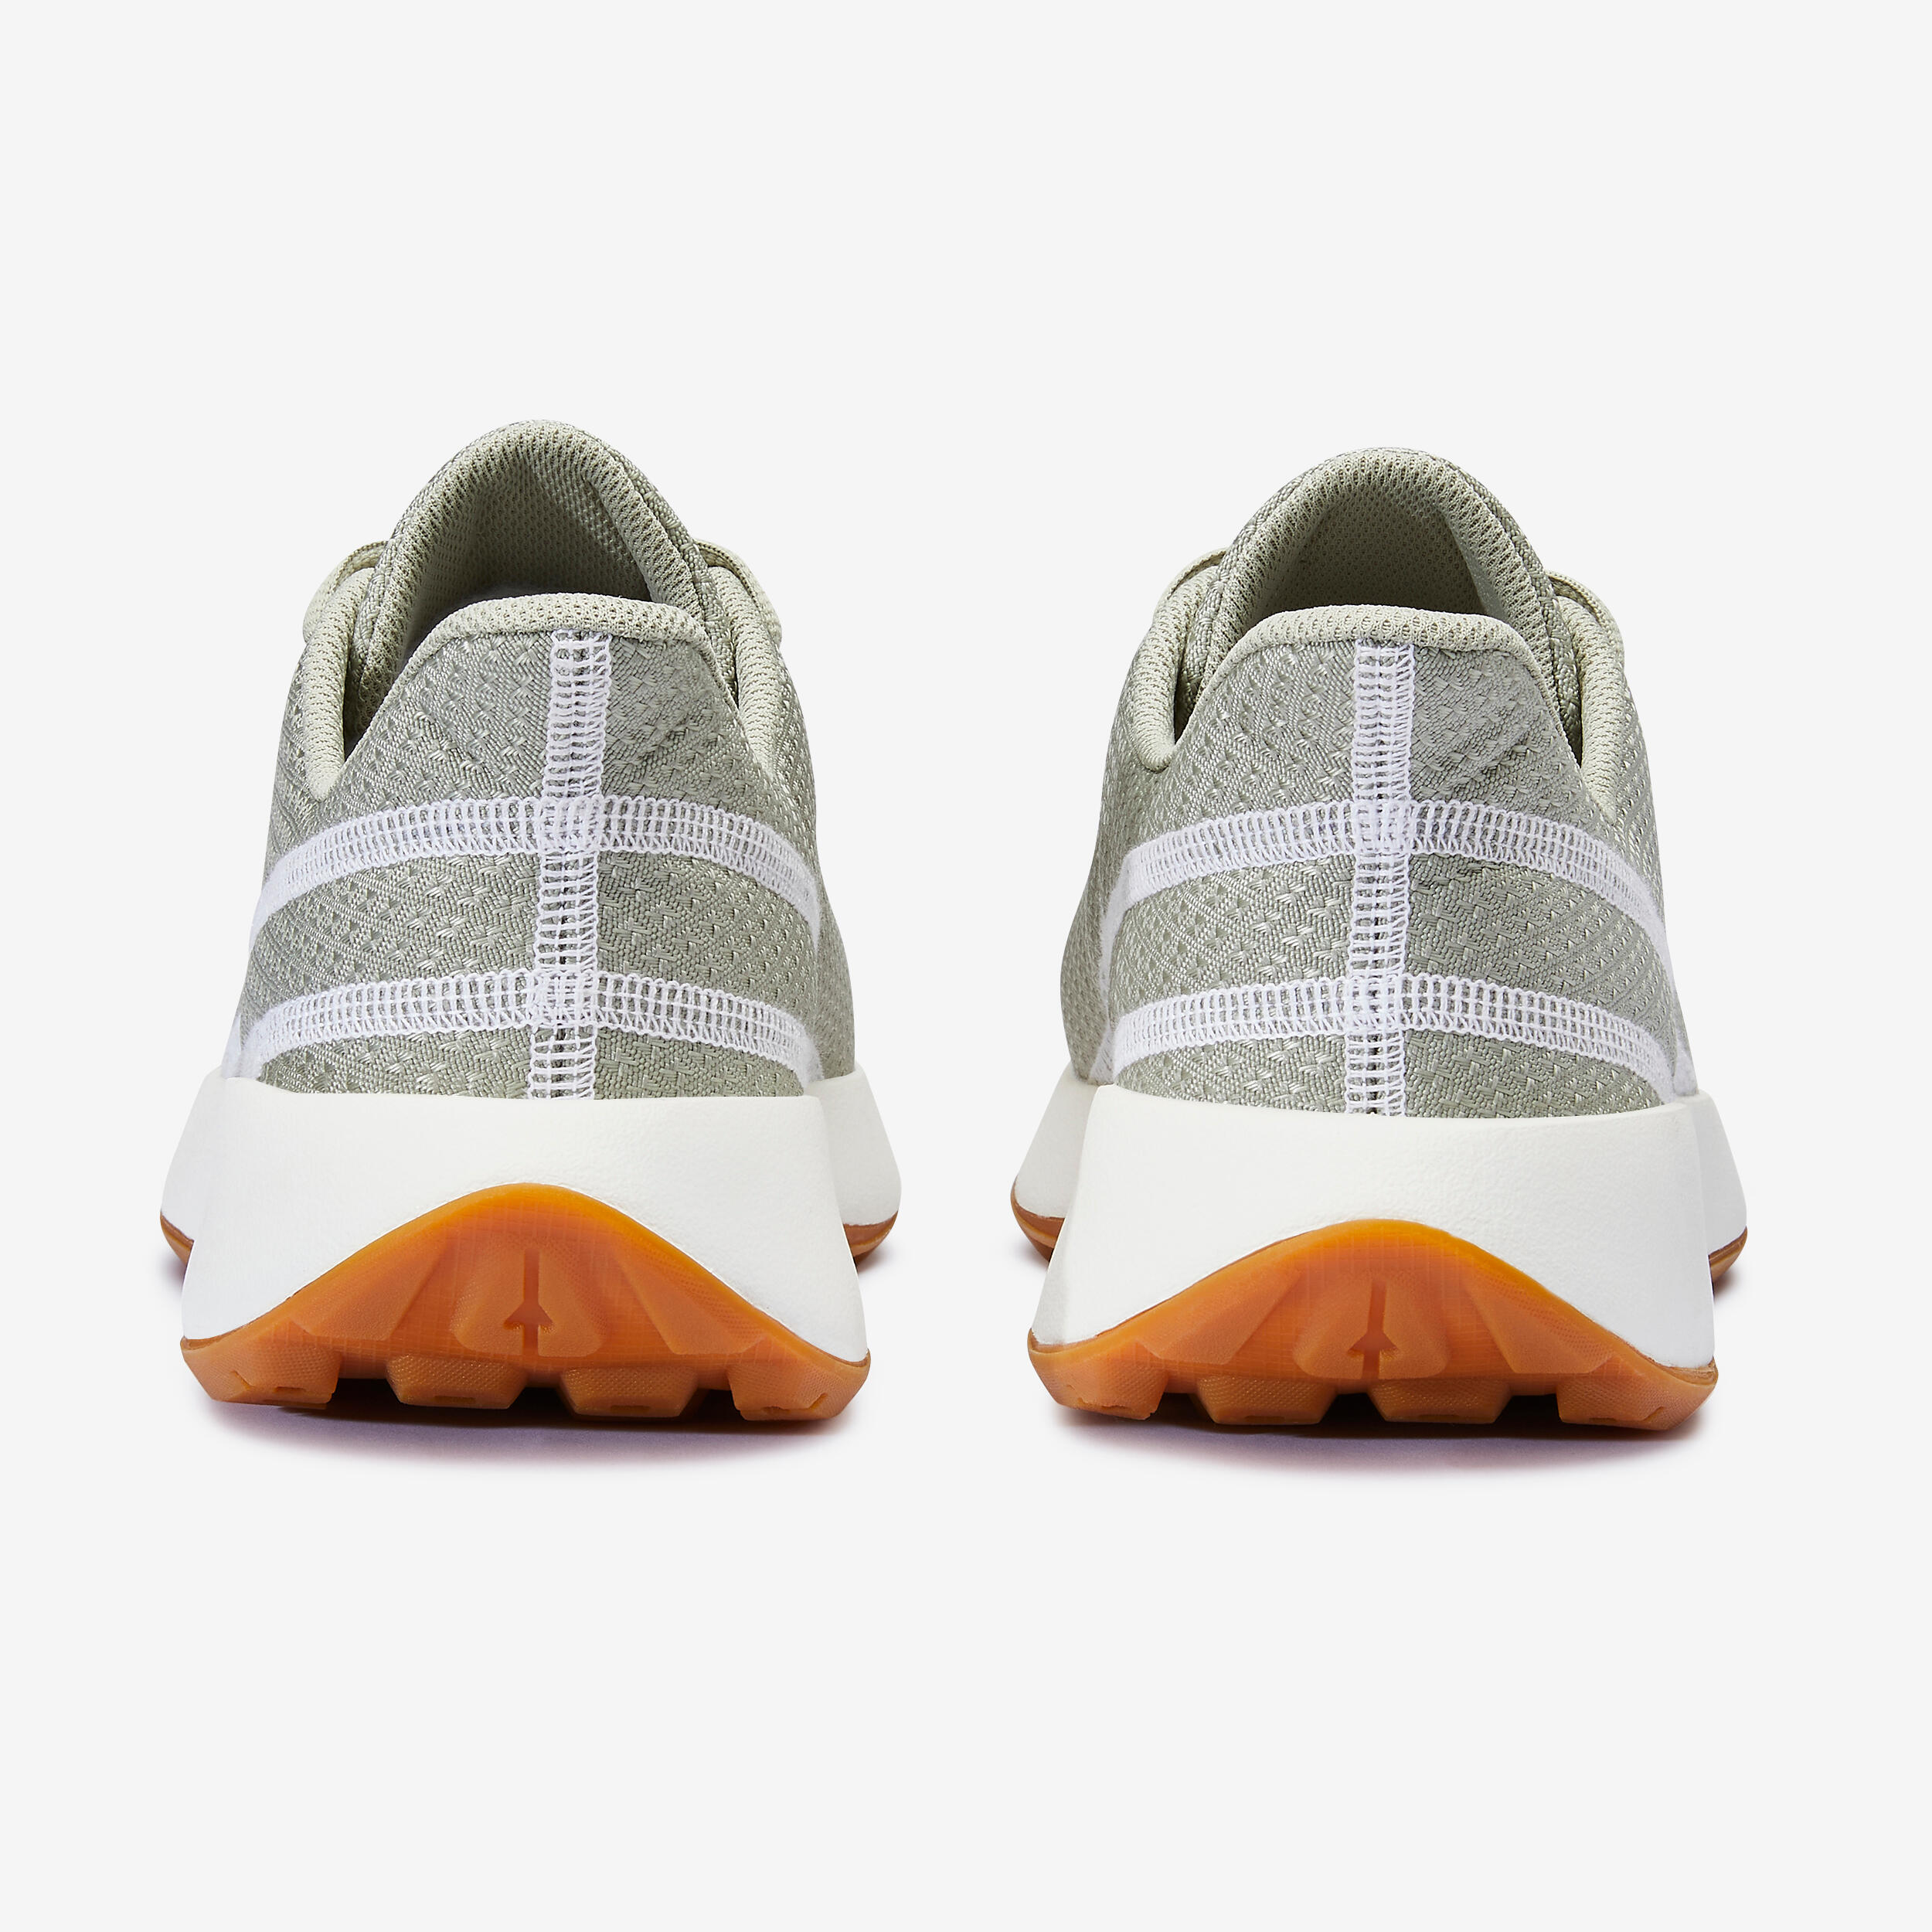 Men's Walking Shoes - Be Geared Up - DECATHLON